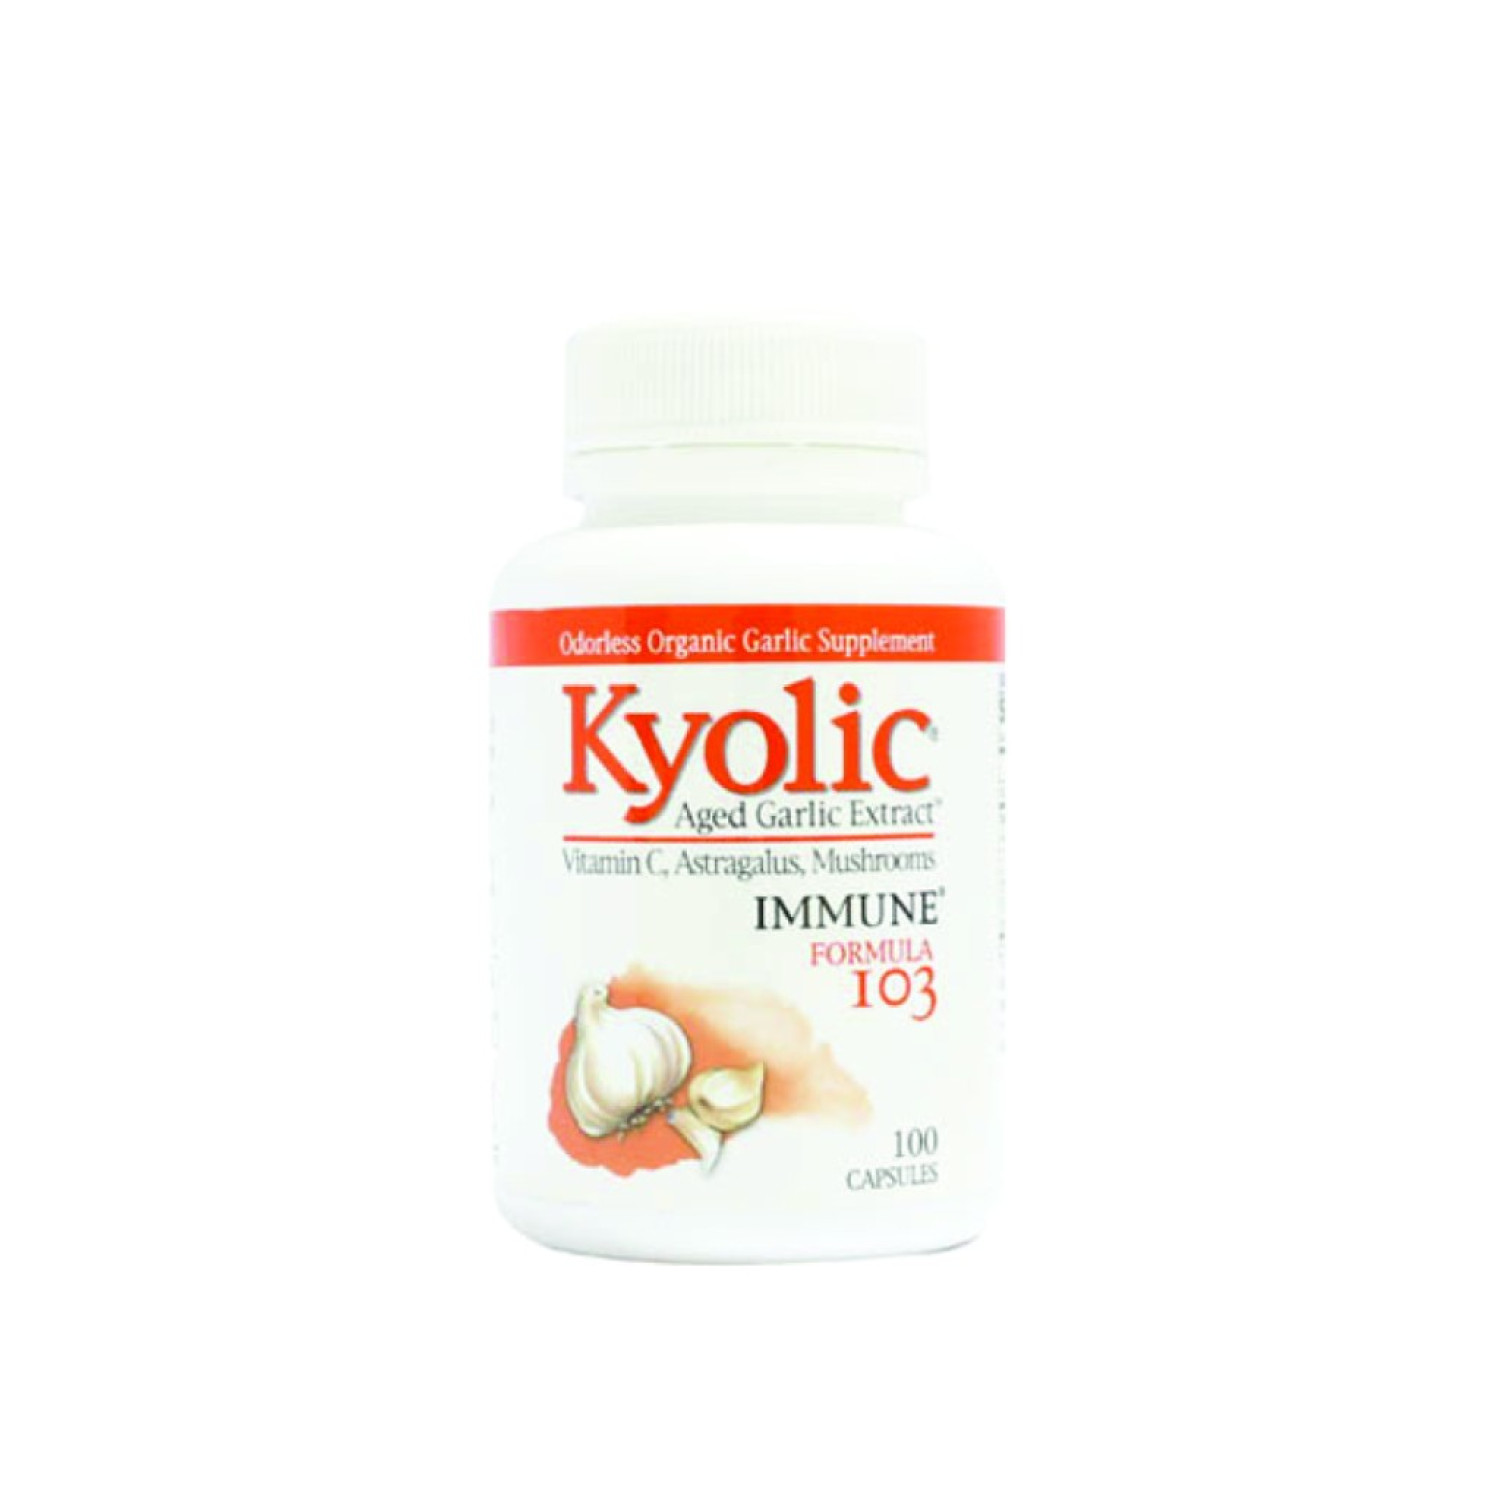 kyolic-formula-103-41-garlic-vitamin-c-immune-100-capsules-exp-date-0124-65436f9eb2eb4.jpeg